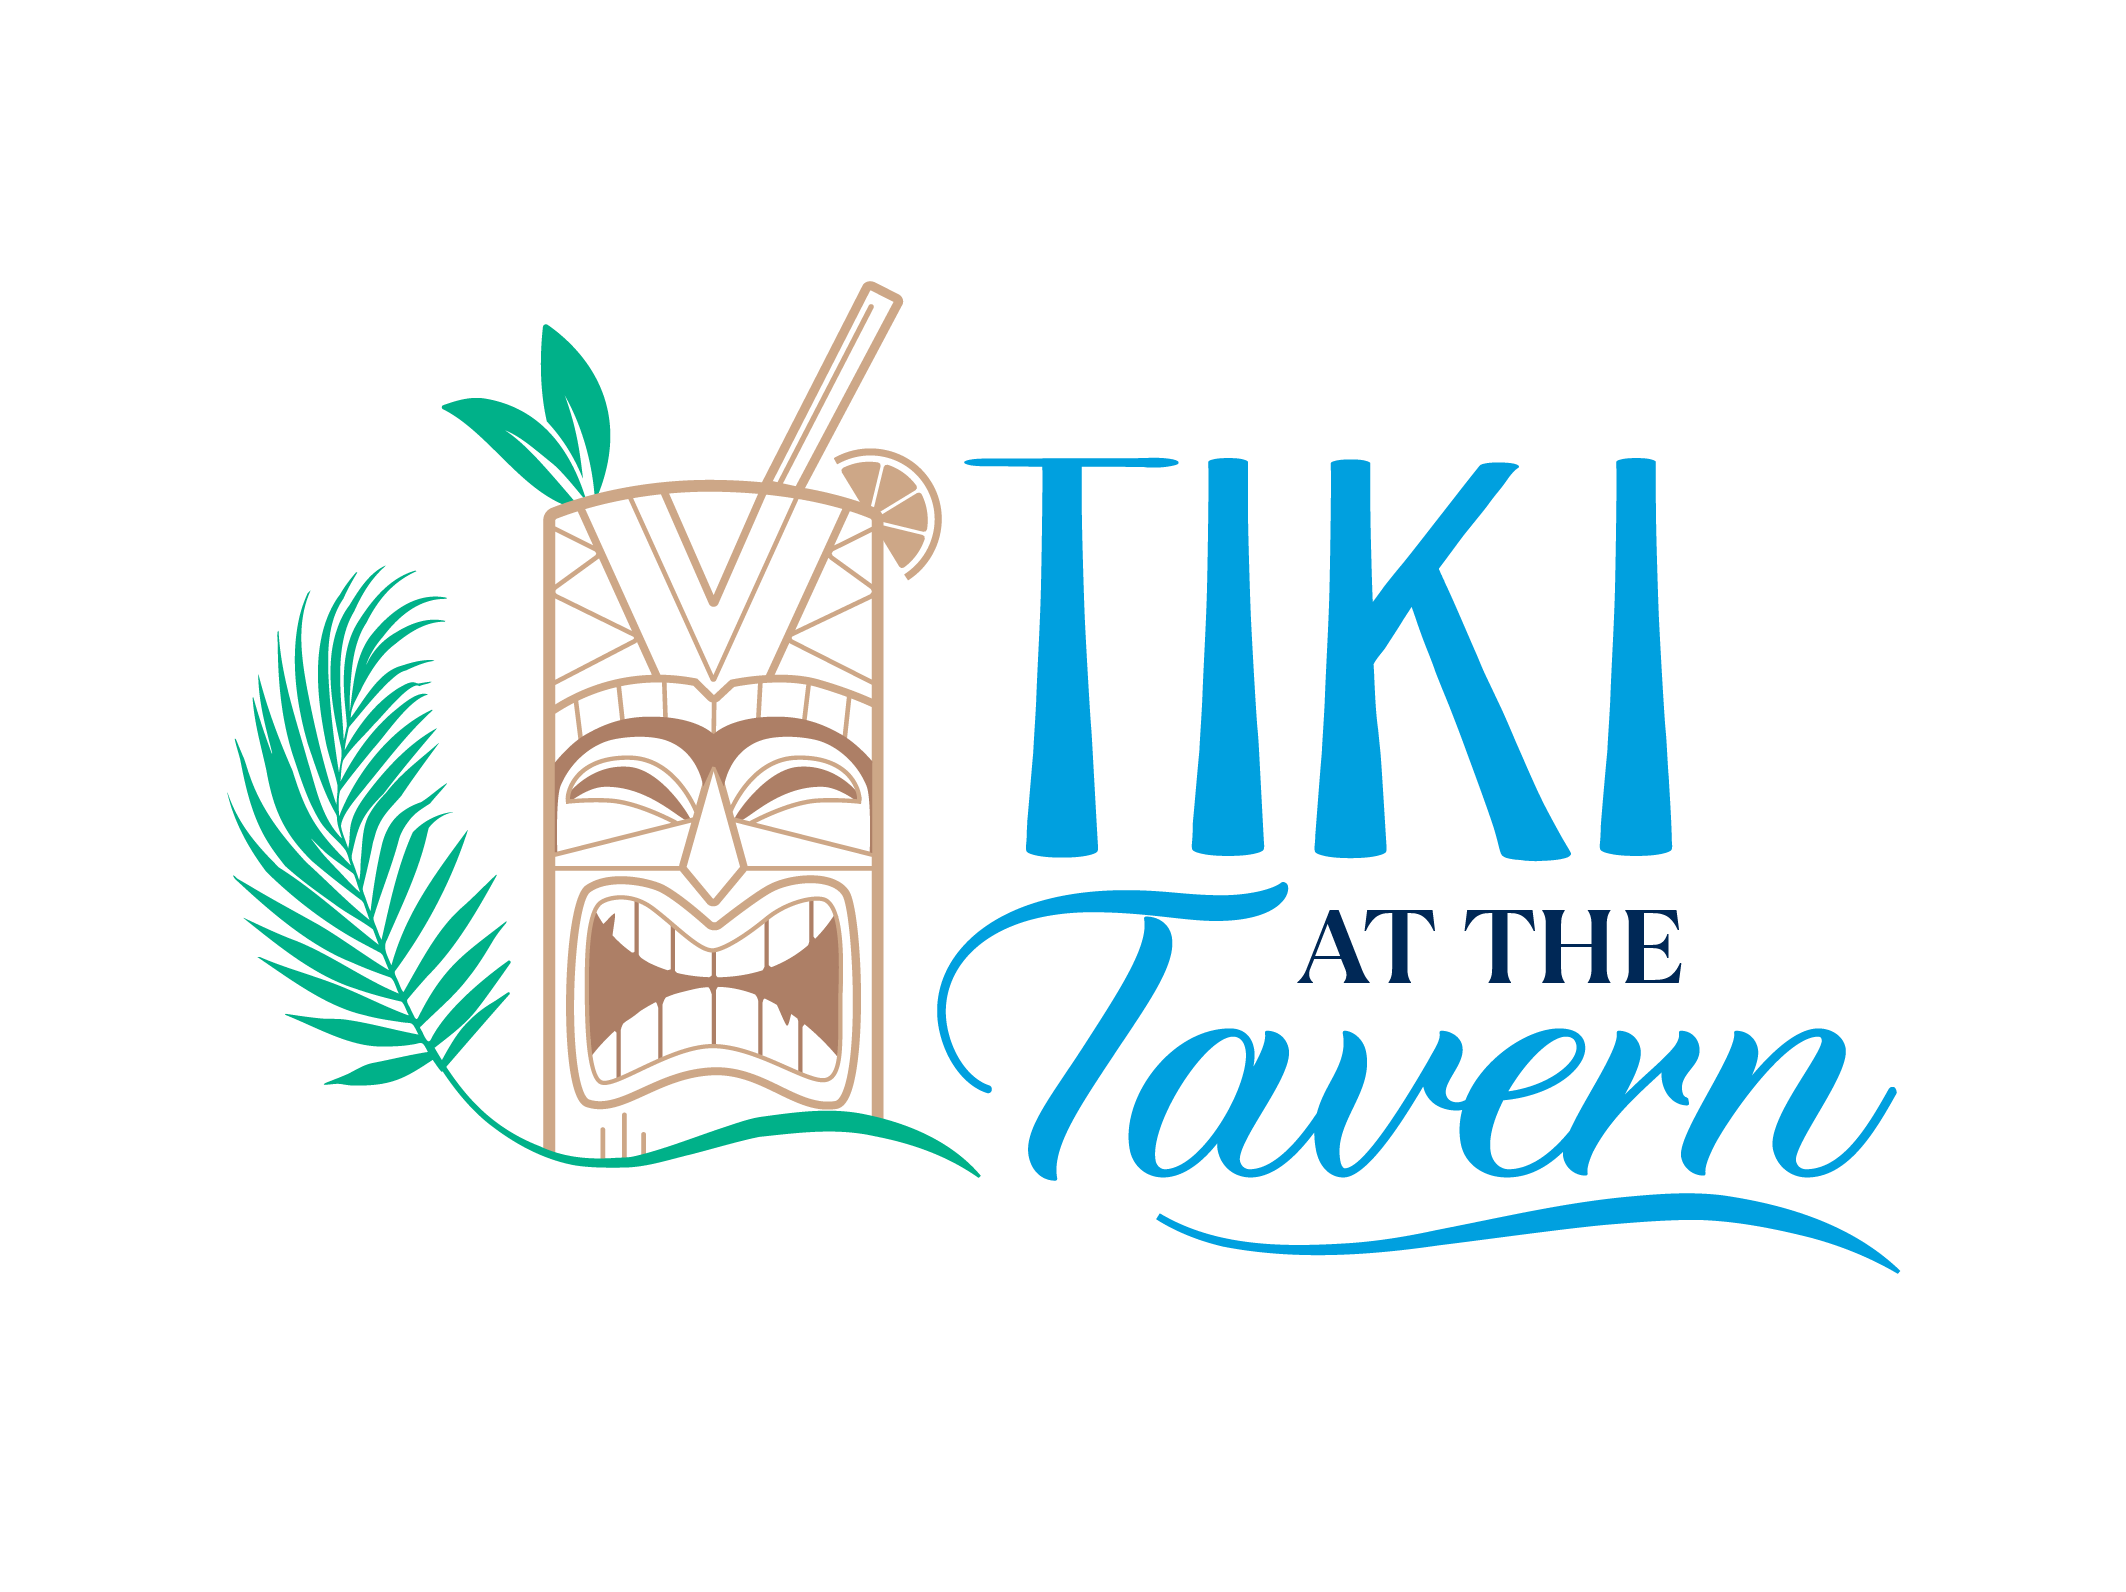 Tiki at the Tavern